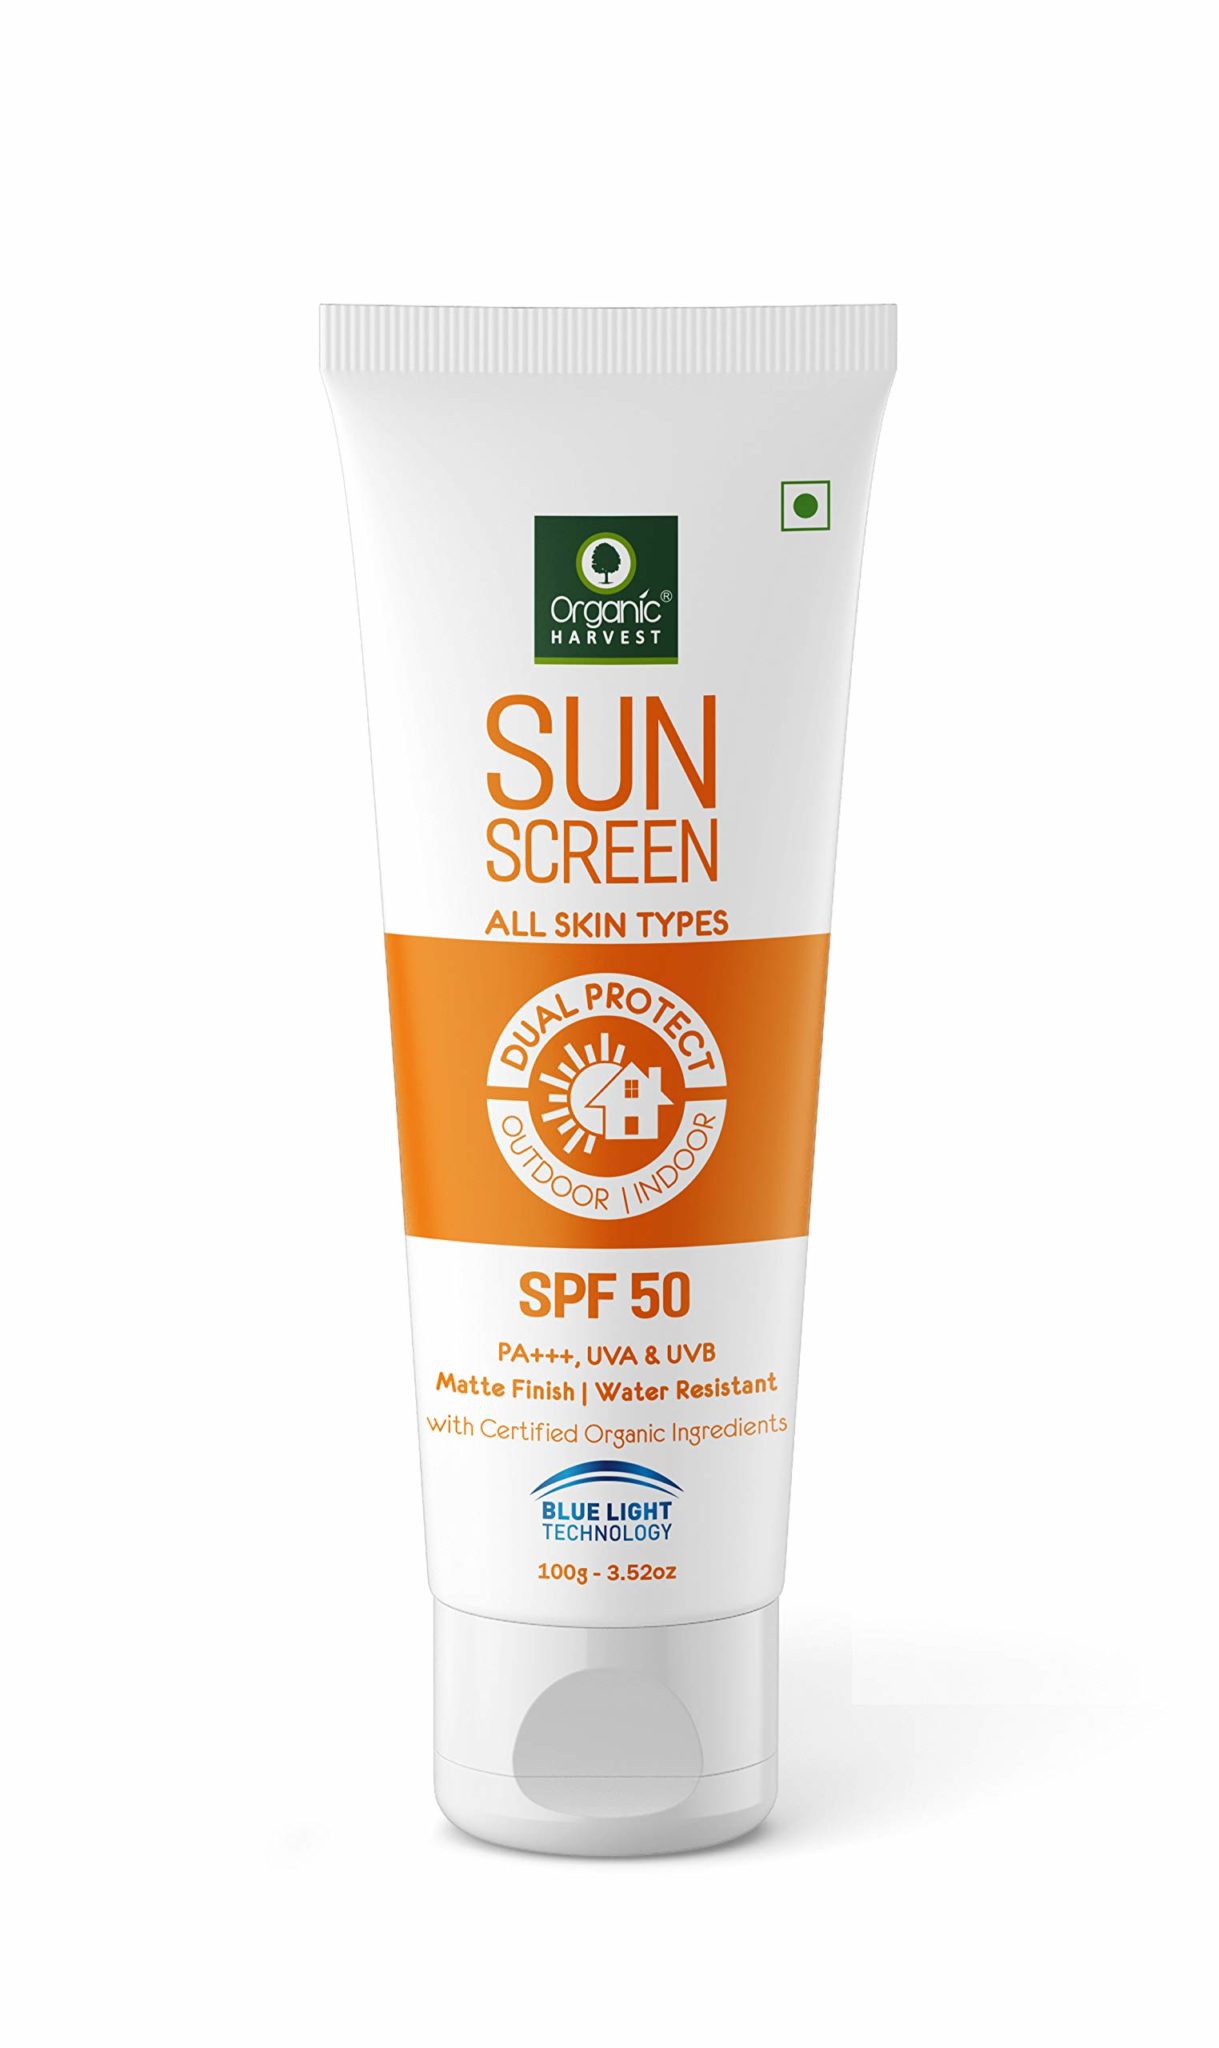 Organic Harvest Sunscreen For All Skin Types, Spf 50, Pa +++